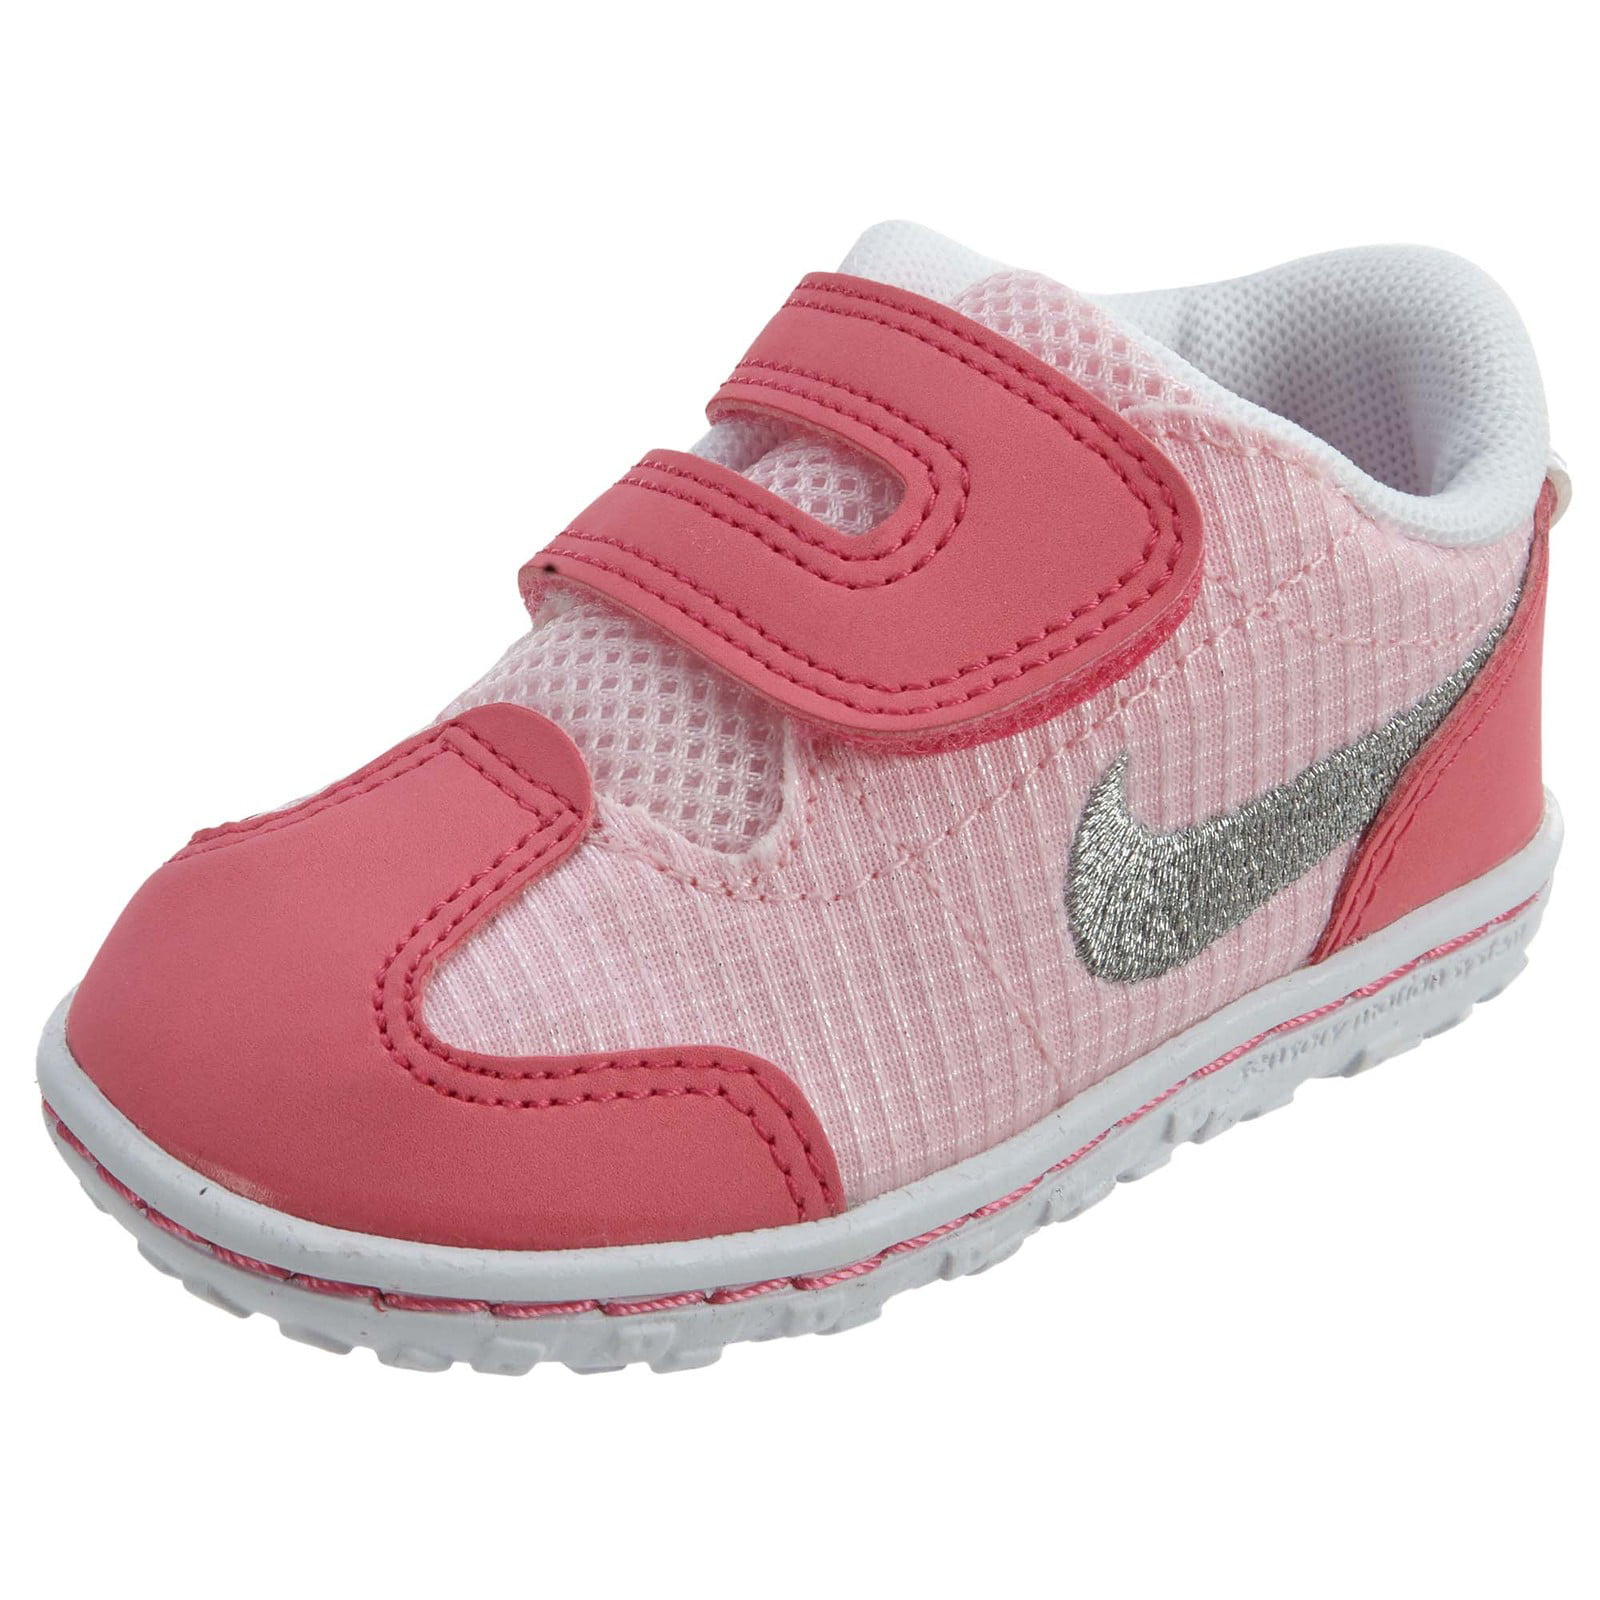 NIKE Roadrunner 2' Sneaker Baby Girl's First Walker Shoes - Walmart.com